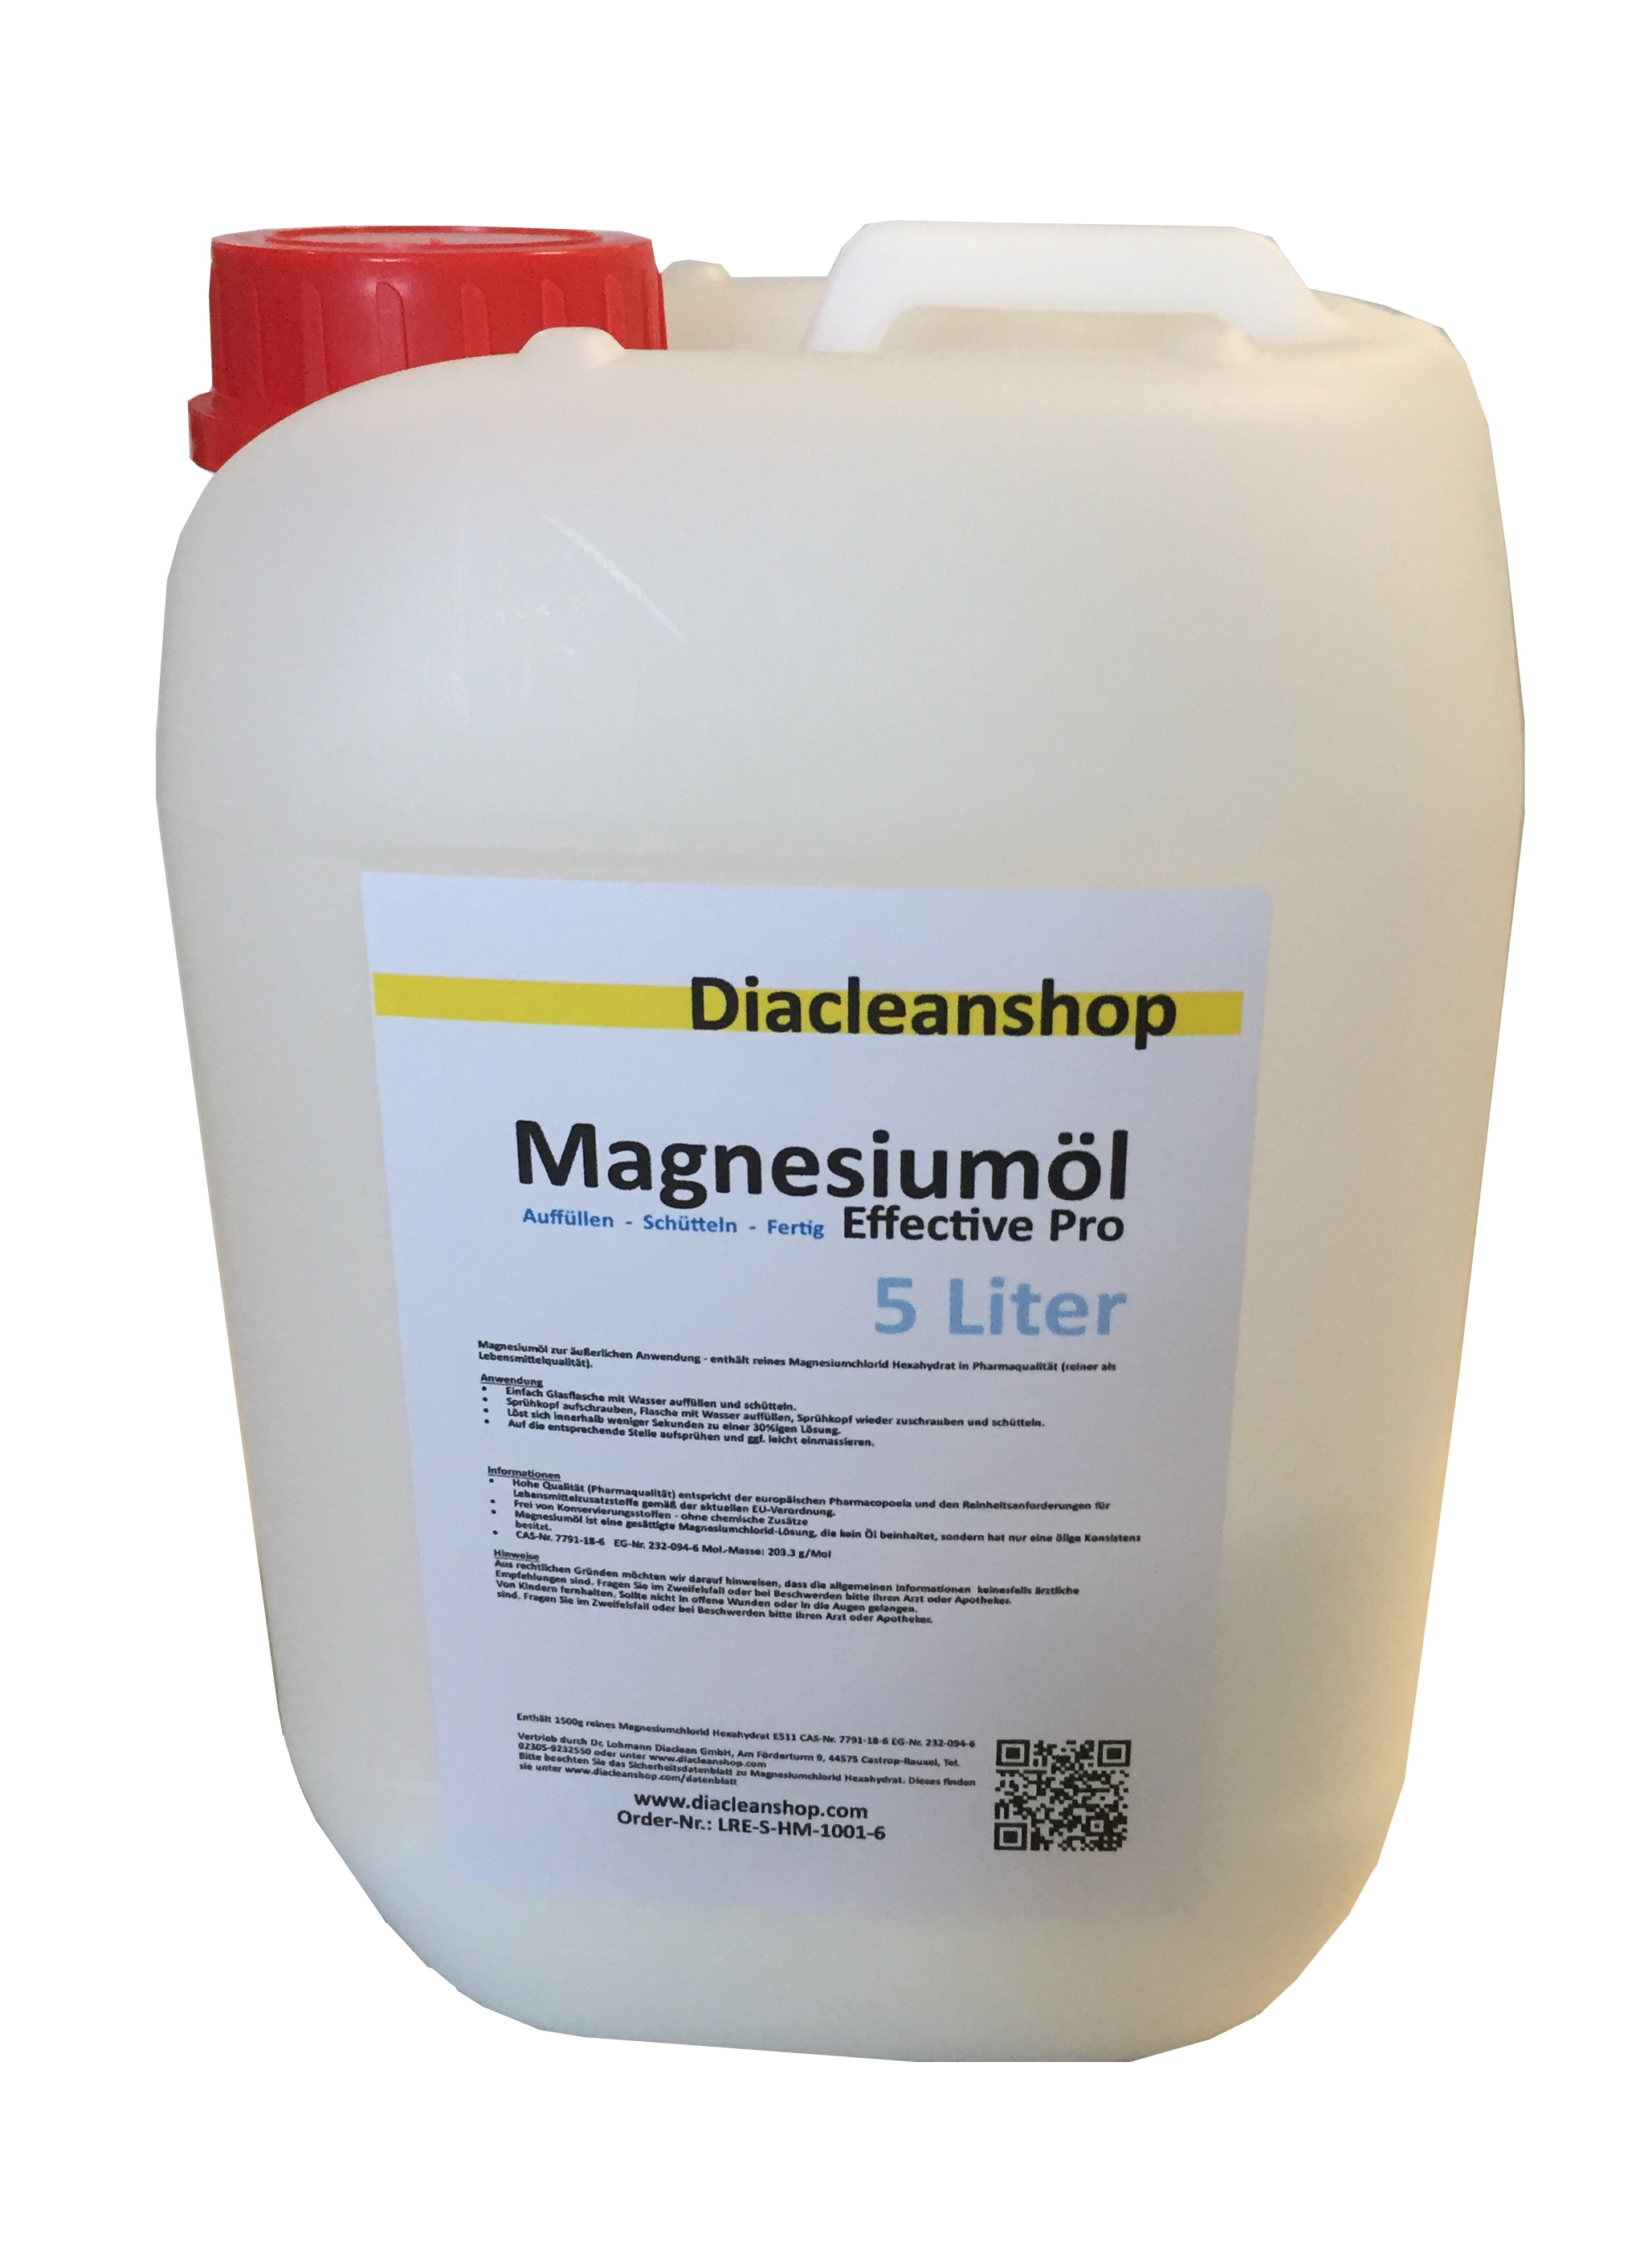 Magnesiumöl Effective Pro - 5 Liter Vorratspaket